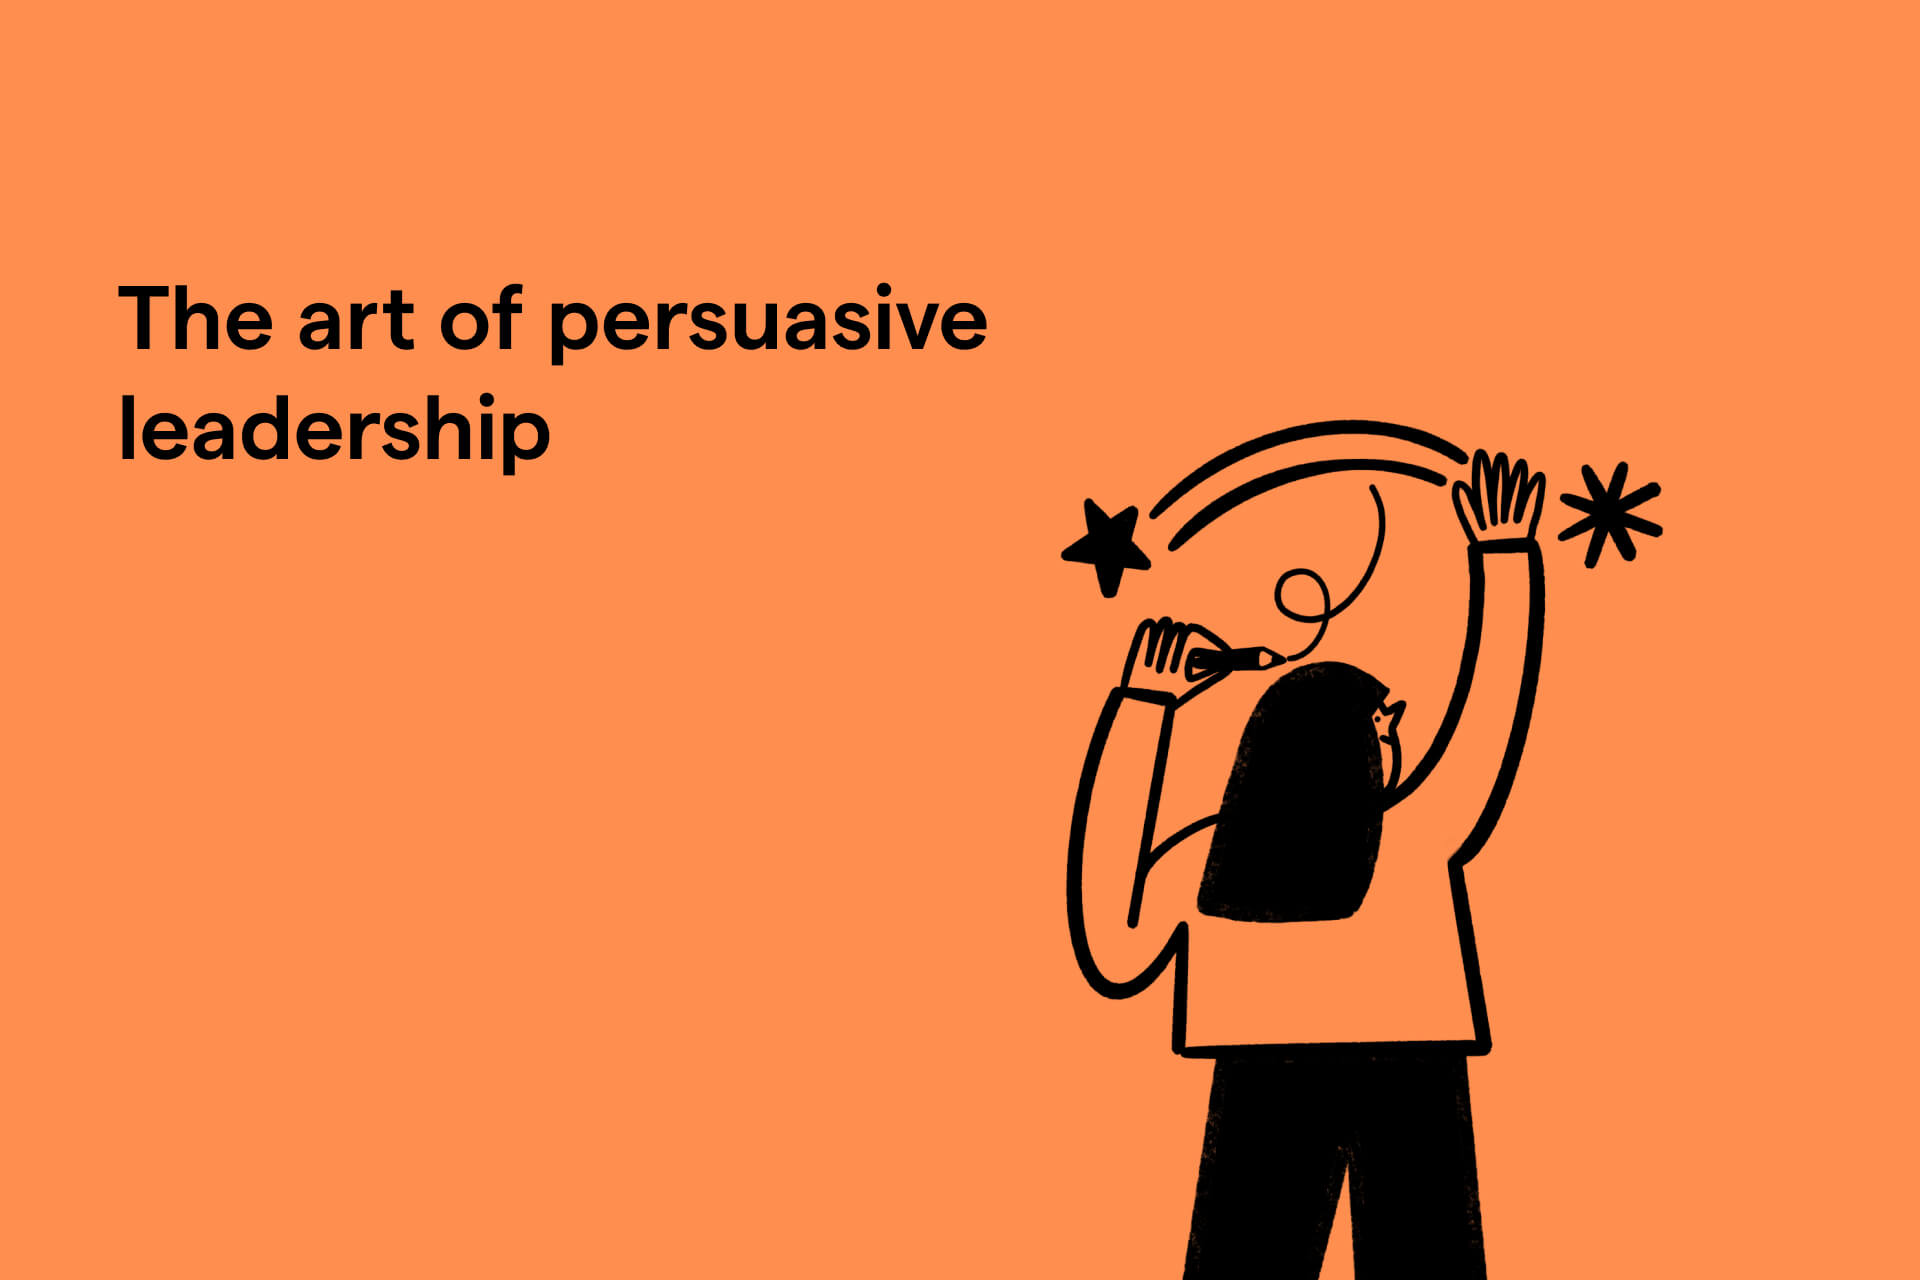 The art of persuasive leadership